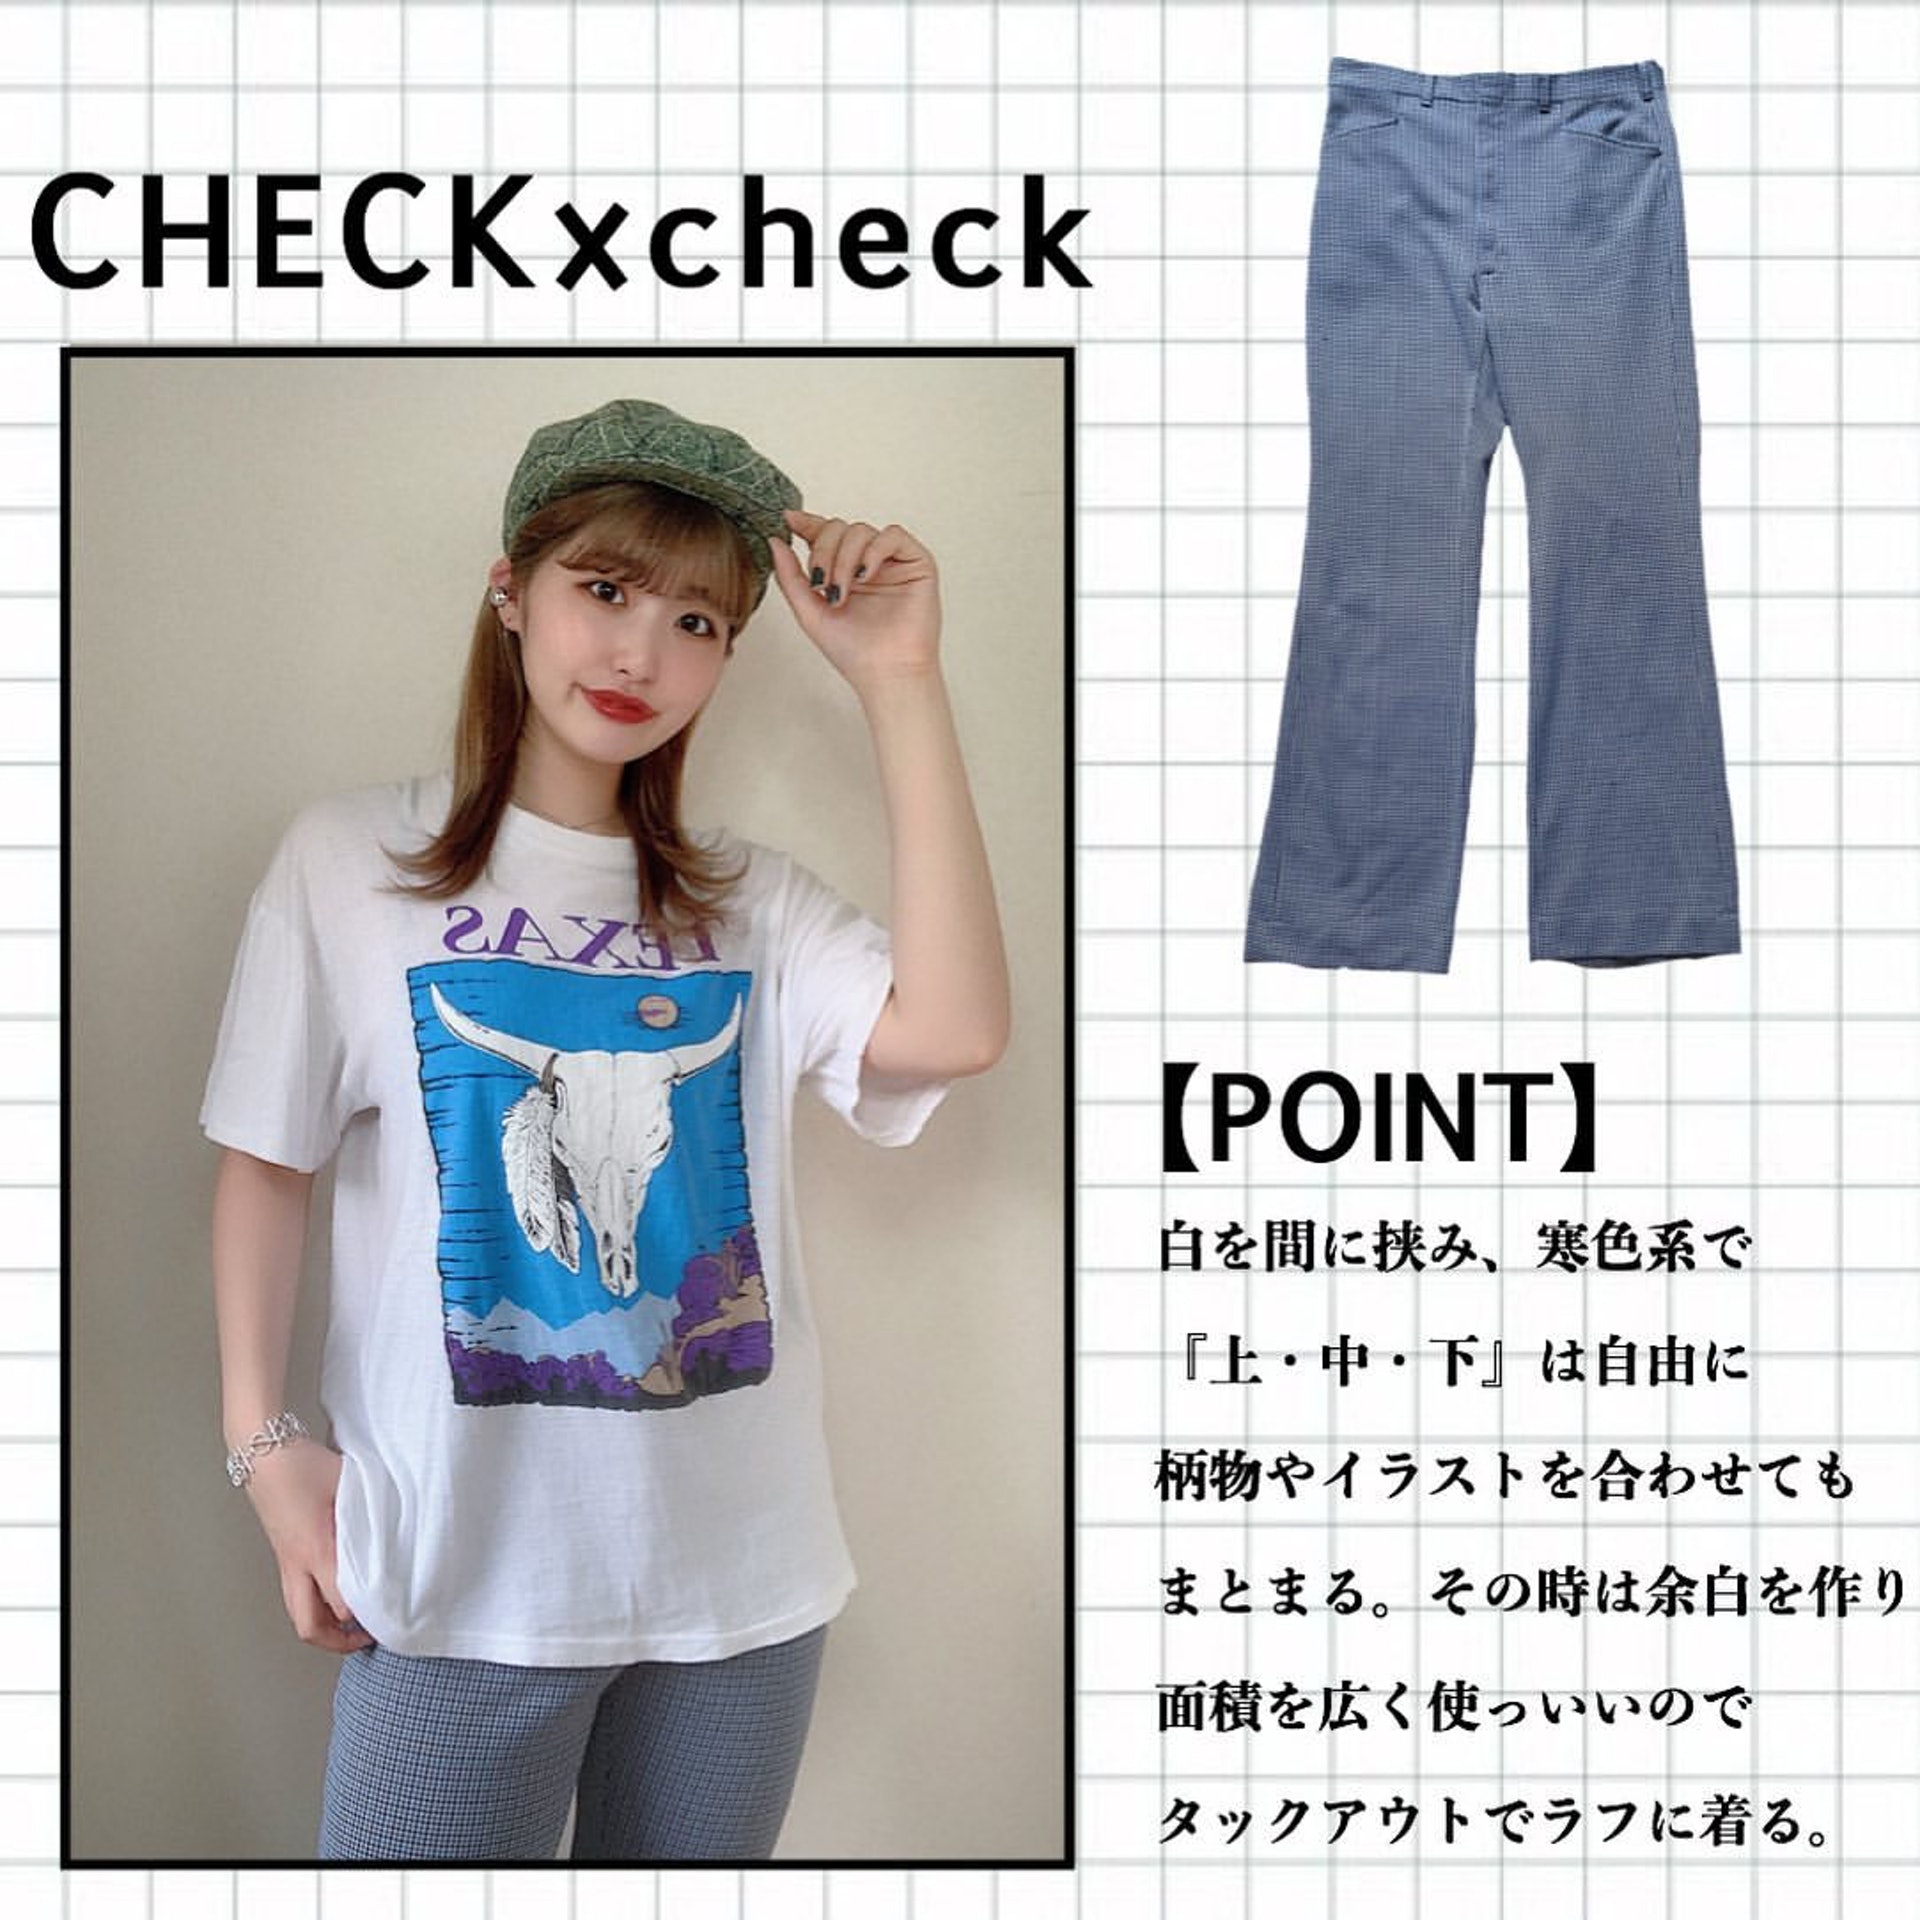 Chaki亦選擇以格仔長褲搭配圖案T-Shirt，配襯帽子，打造復古造型。(__nmsk13@Instagram)